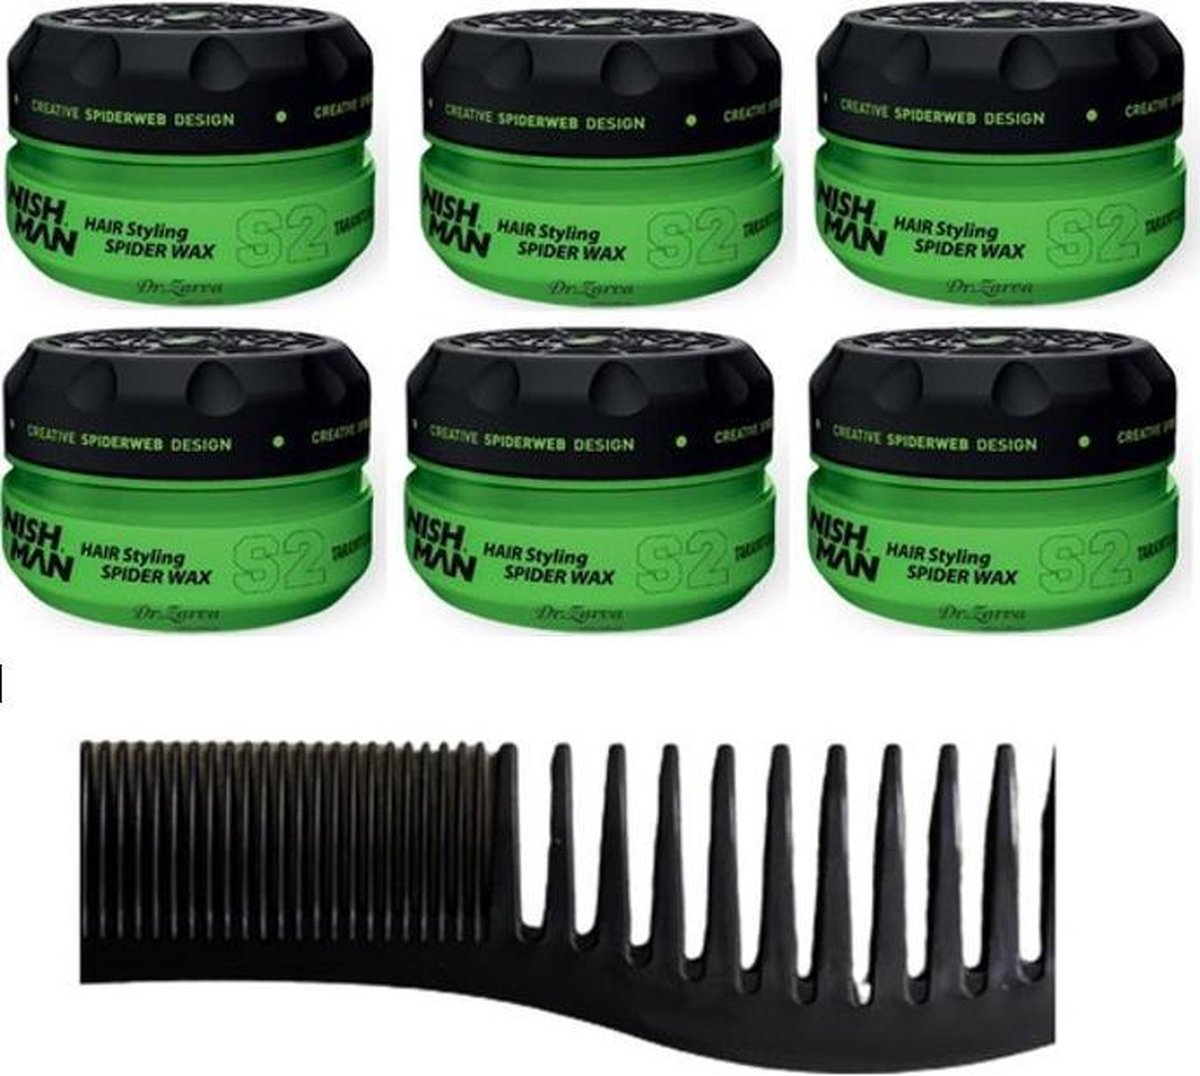 Nishman Hair Styling Spider Wax S2 6 stuks + Gratis Styling Comb